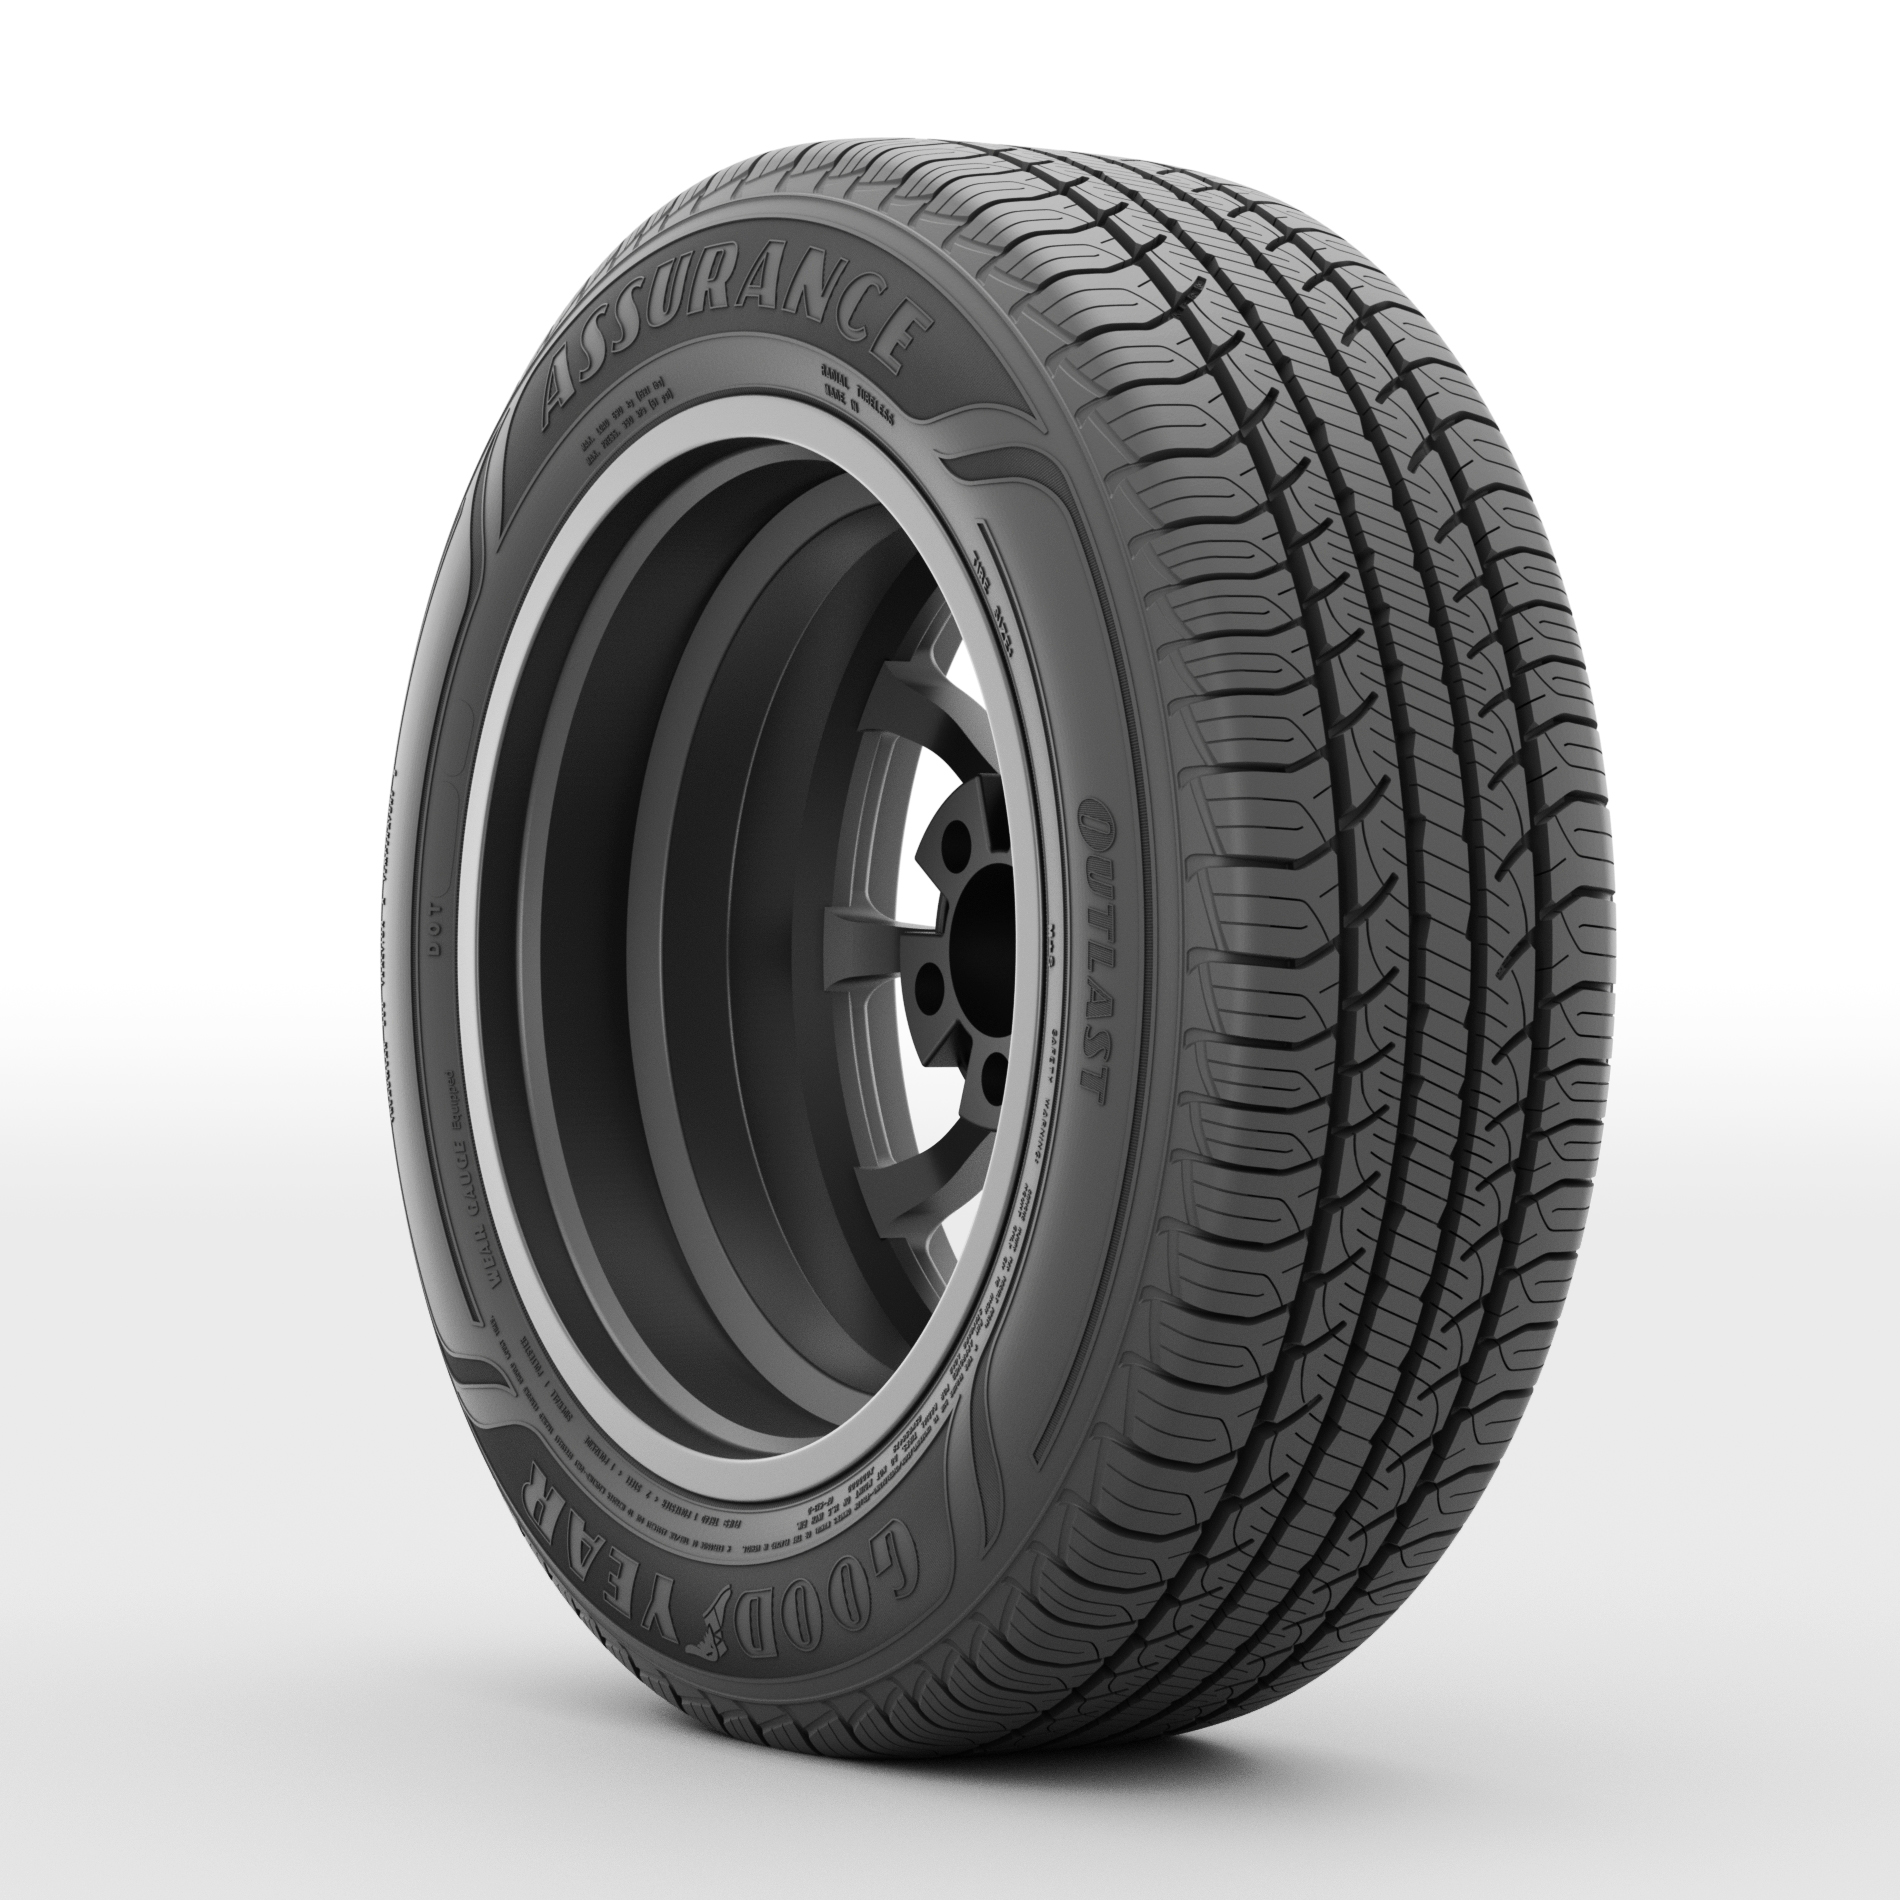 Goodyear Assurance Outlast 235/65R17 Tire All-Season 104H